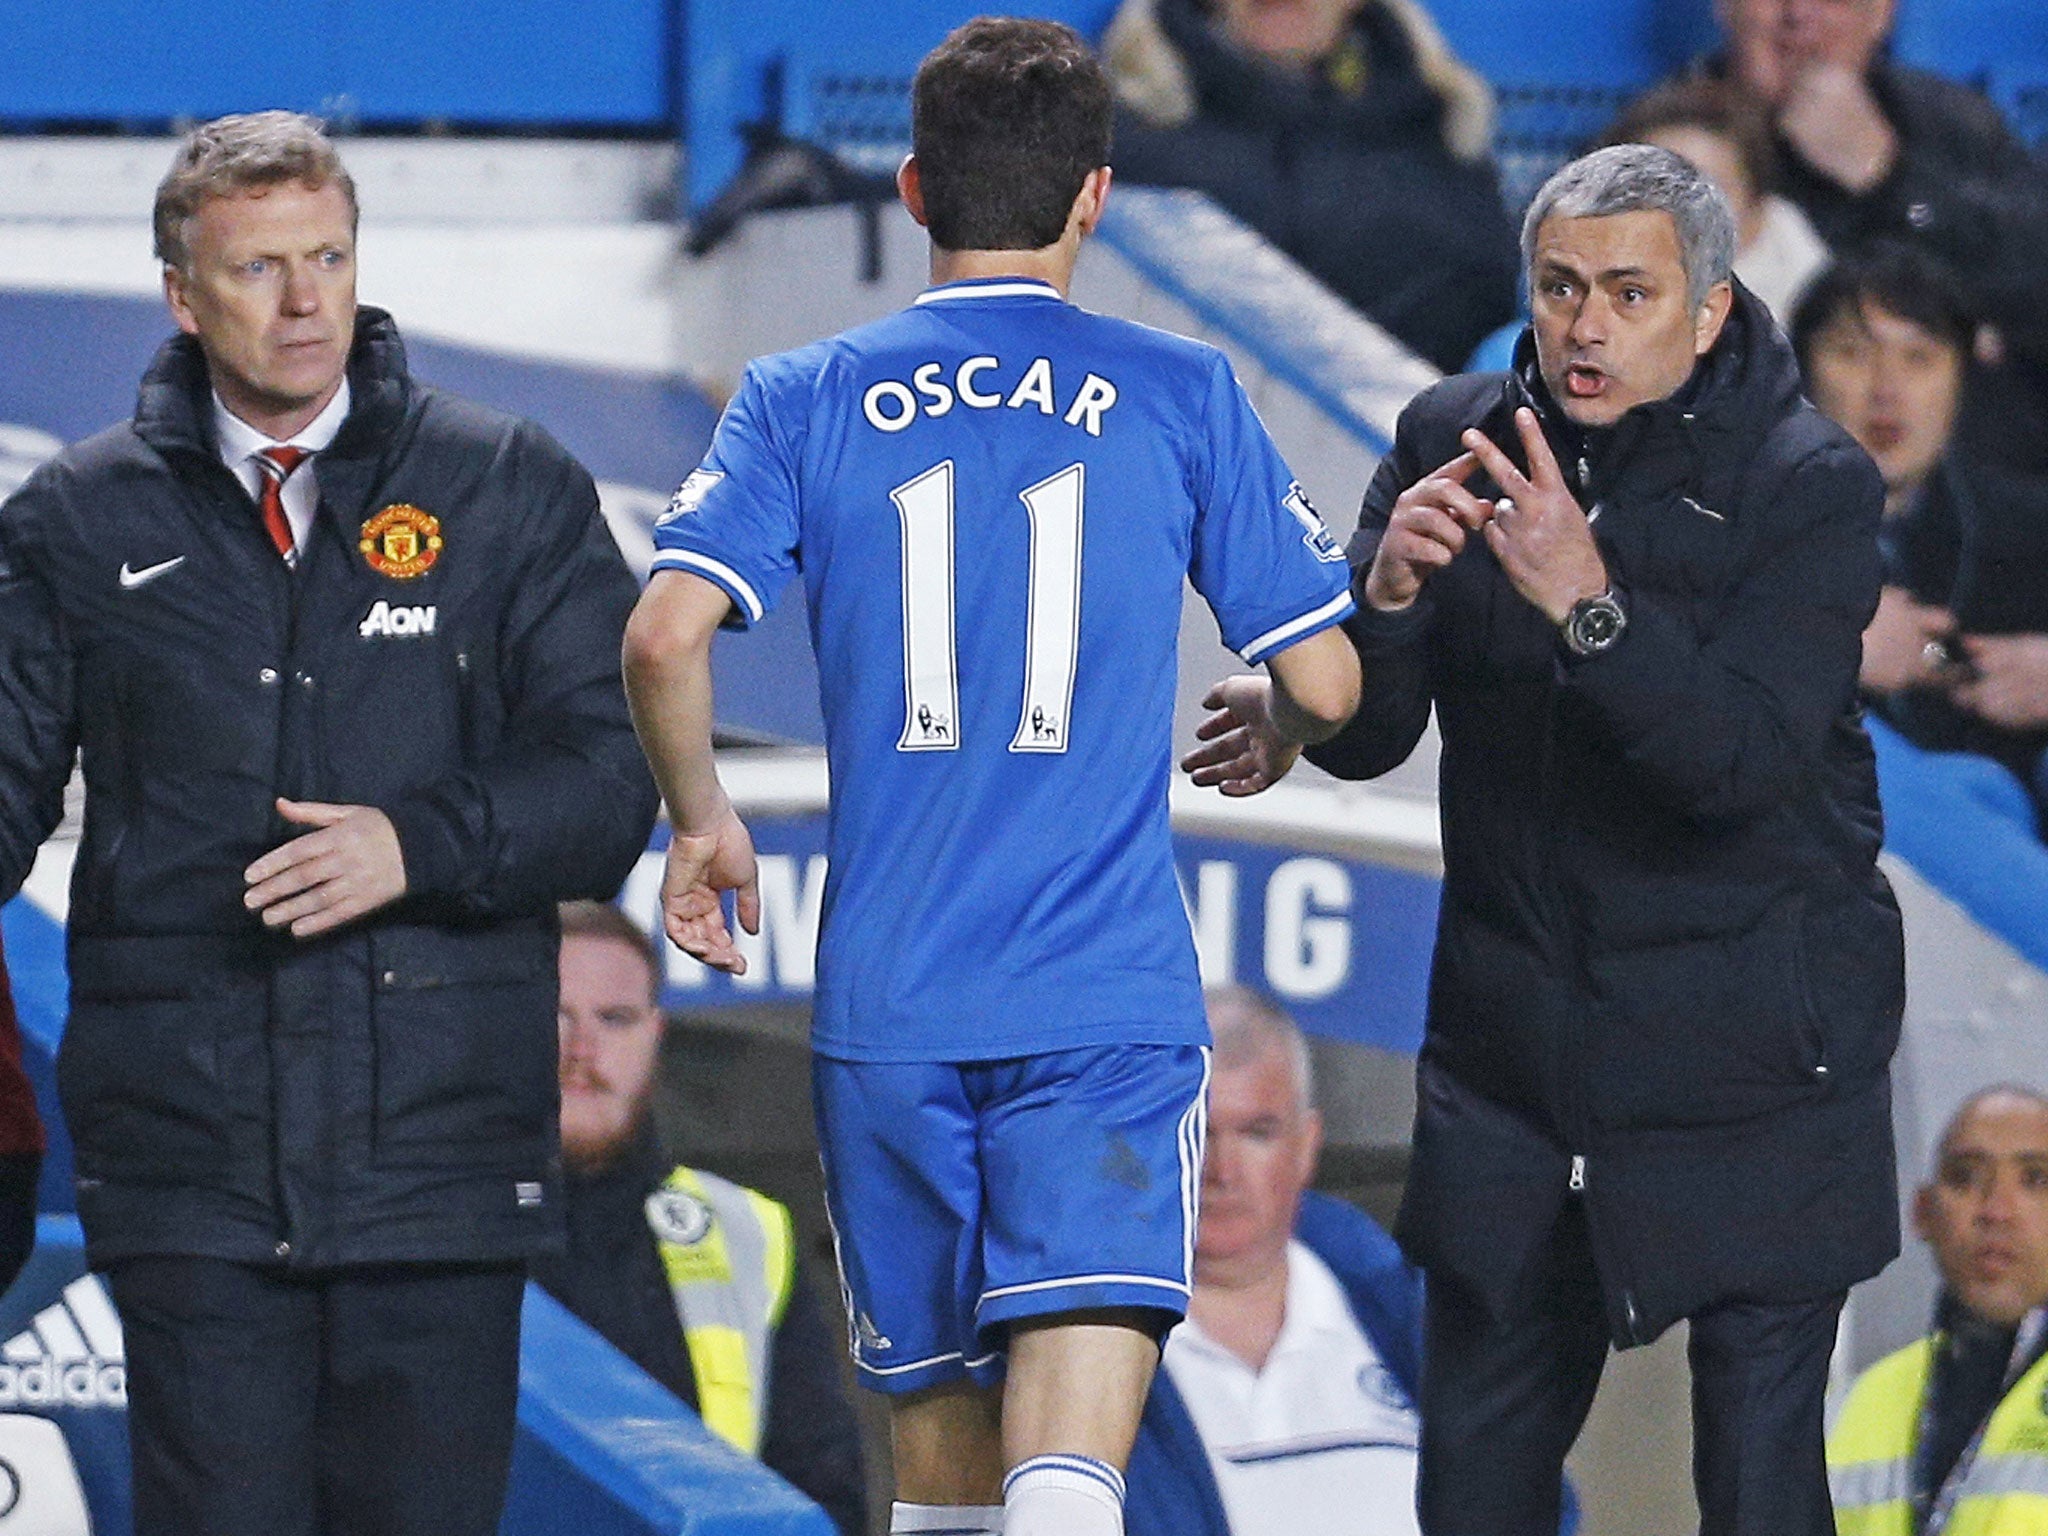 David Moyes looks on as Jose Mourinho gives instructions to Oscar